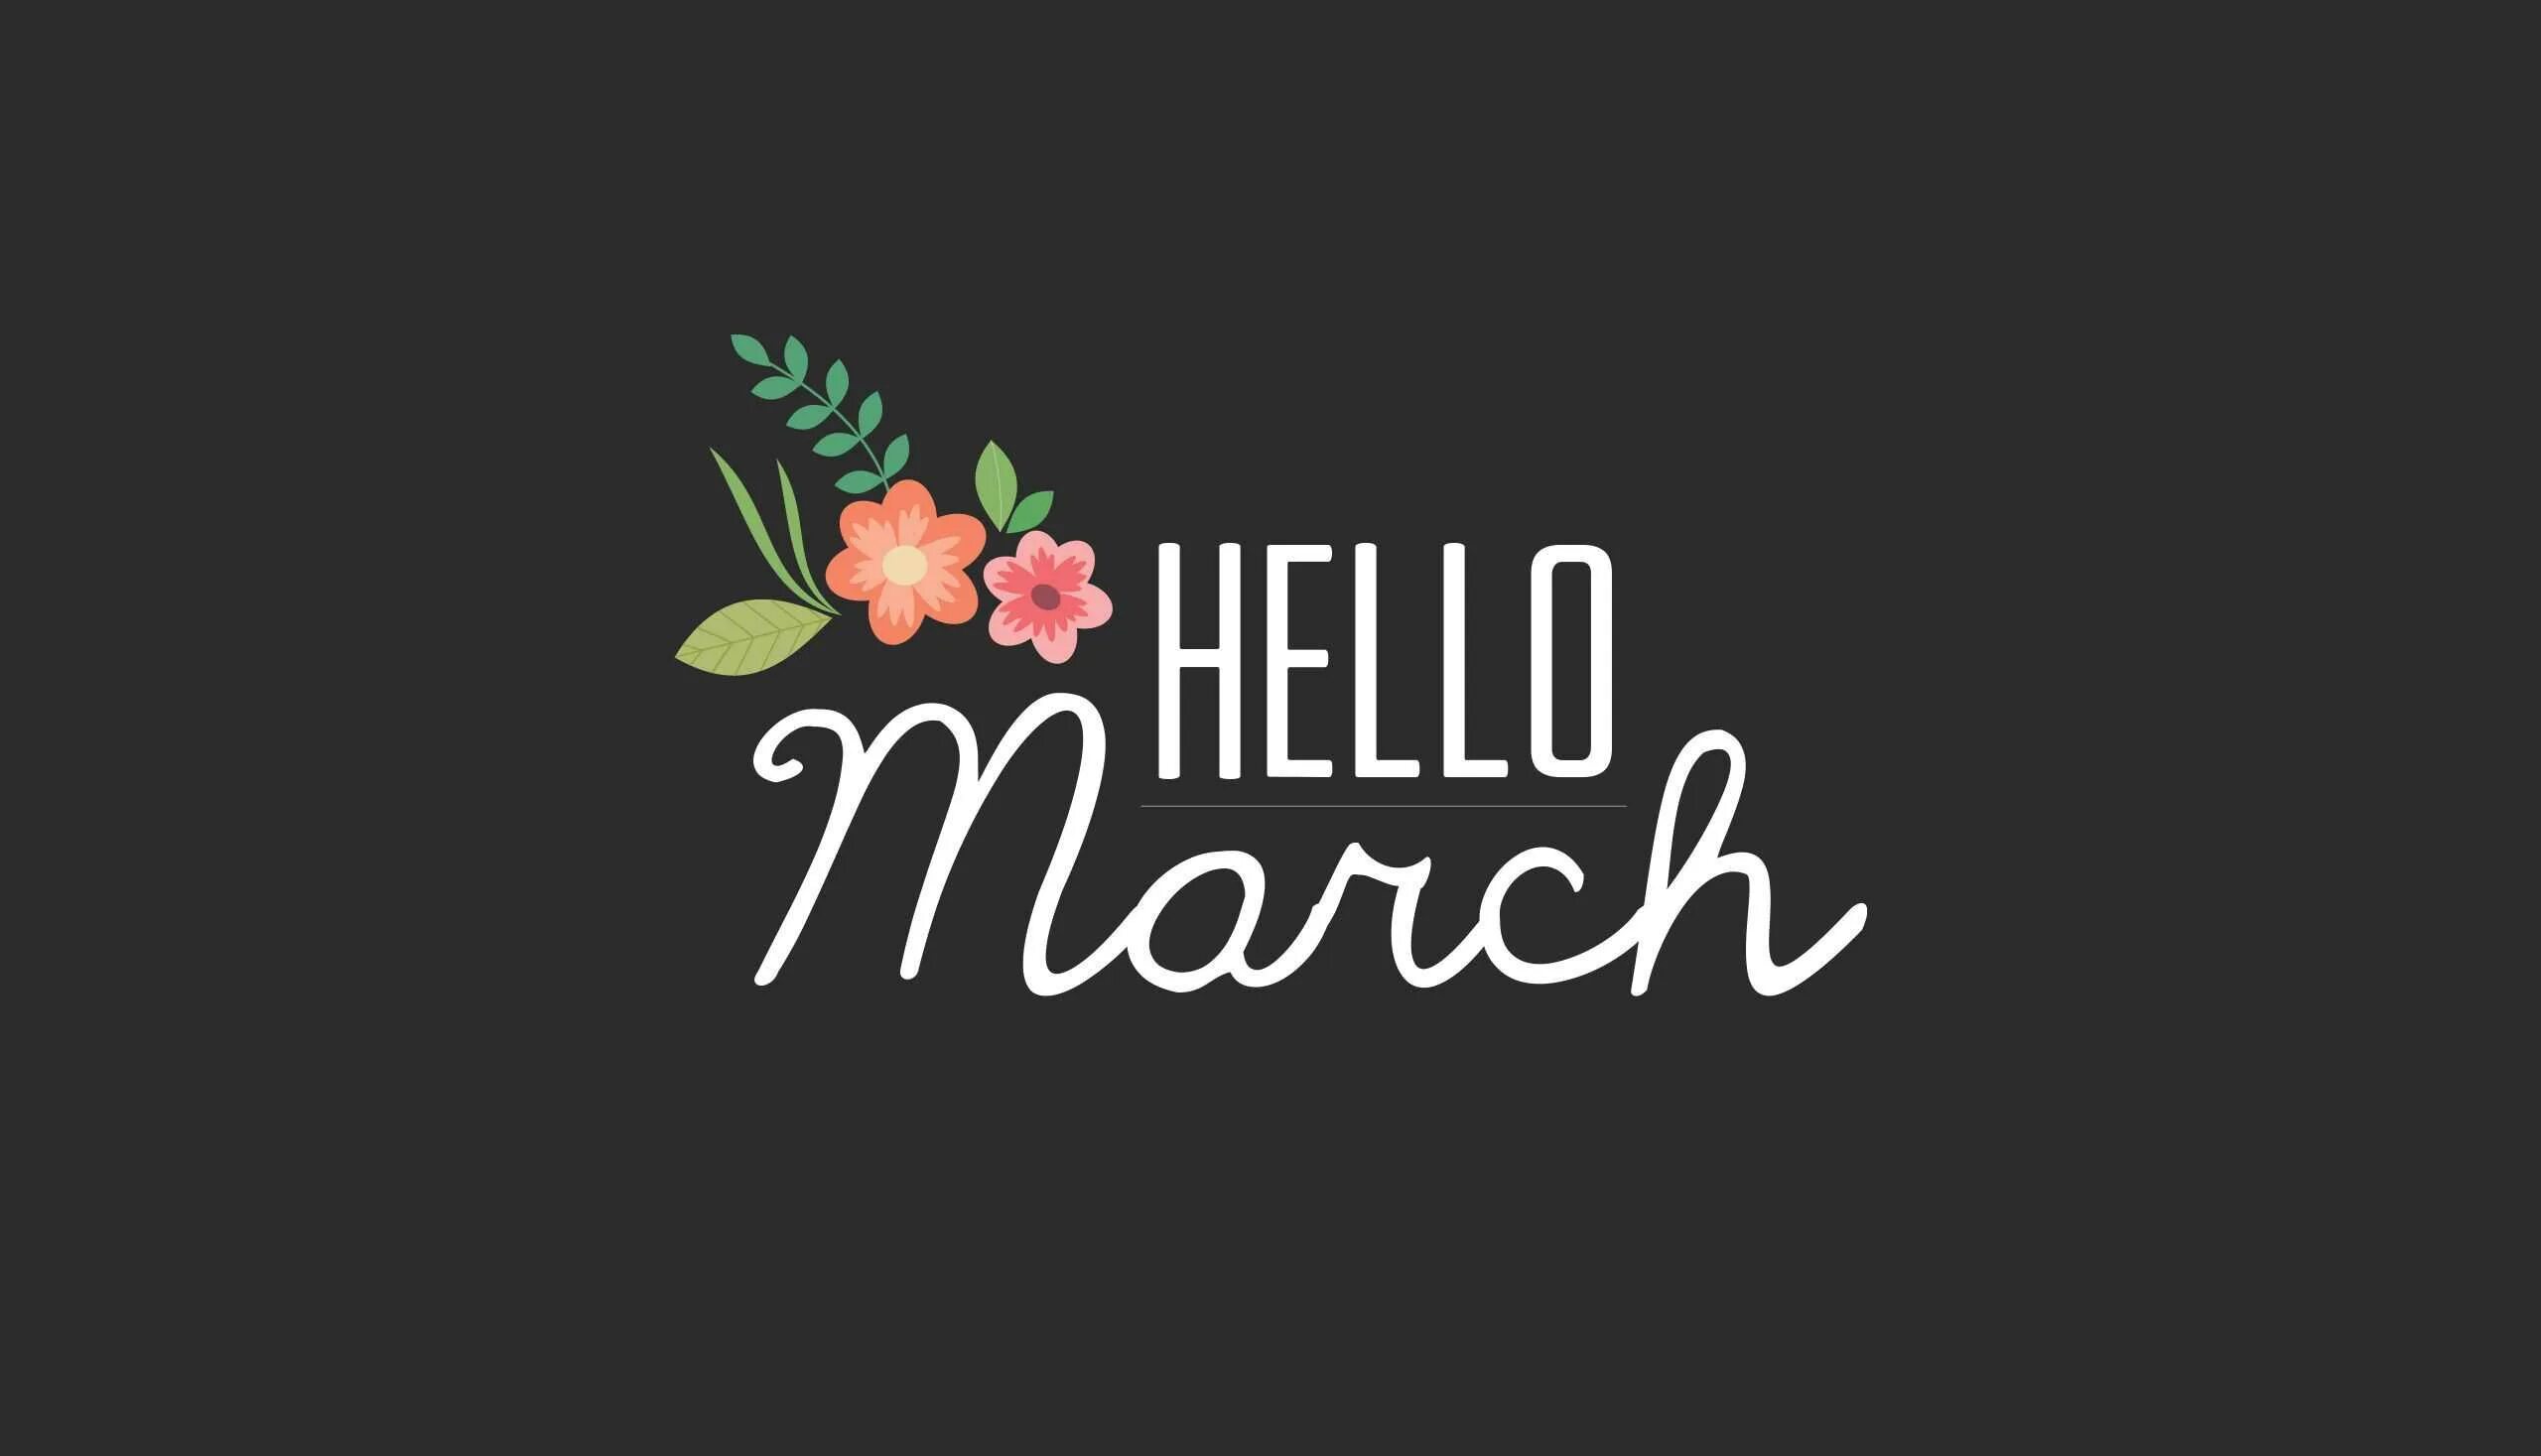 Hello open. Привет март. Весенние надписи. Привет март надпись. Обои с надписью Spring.